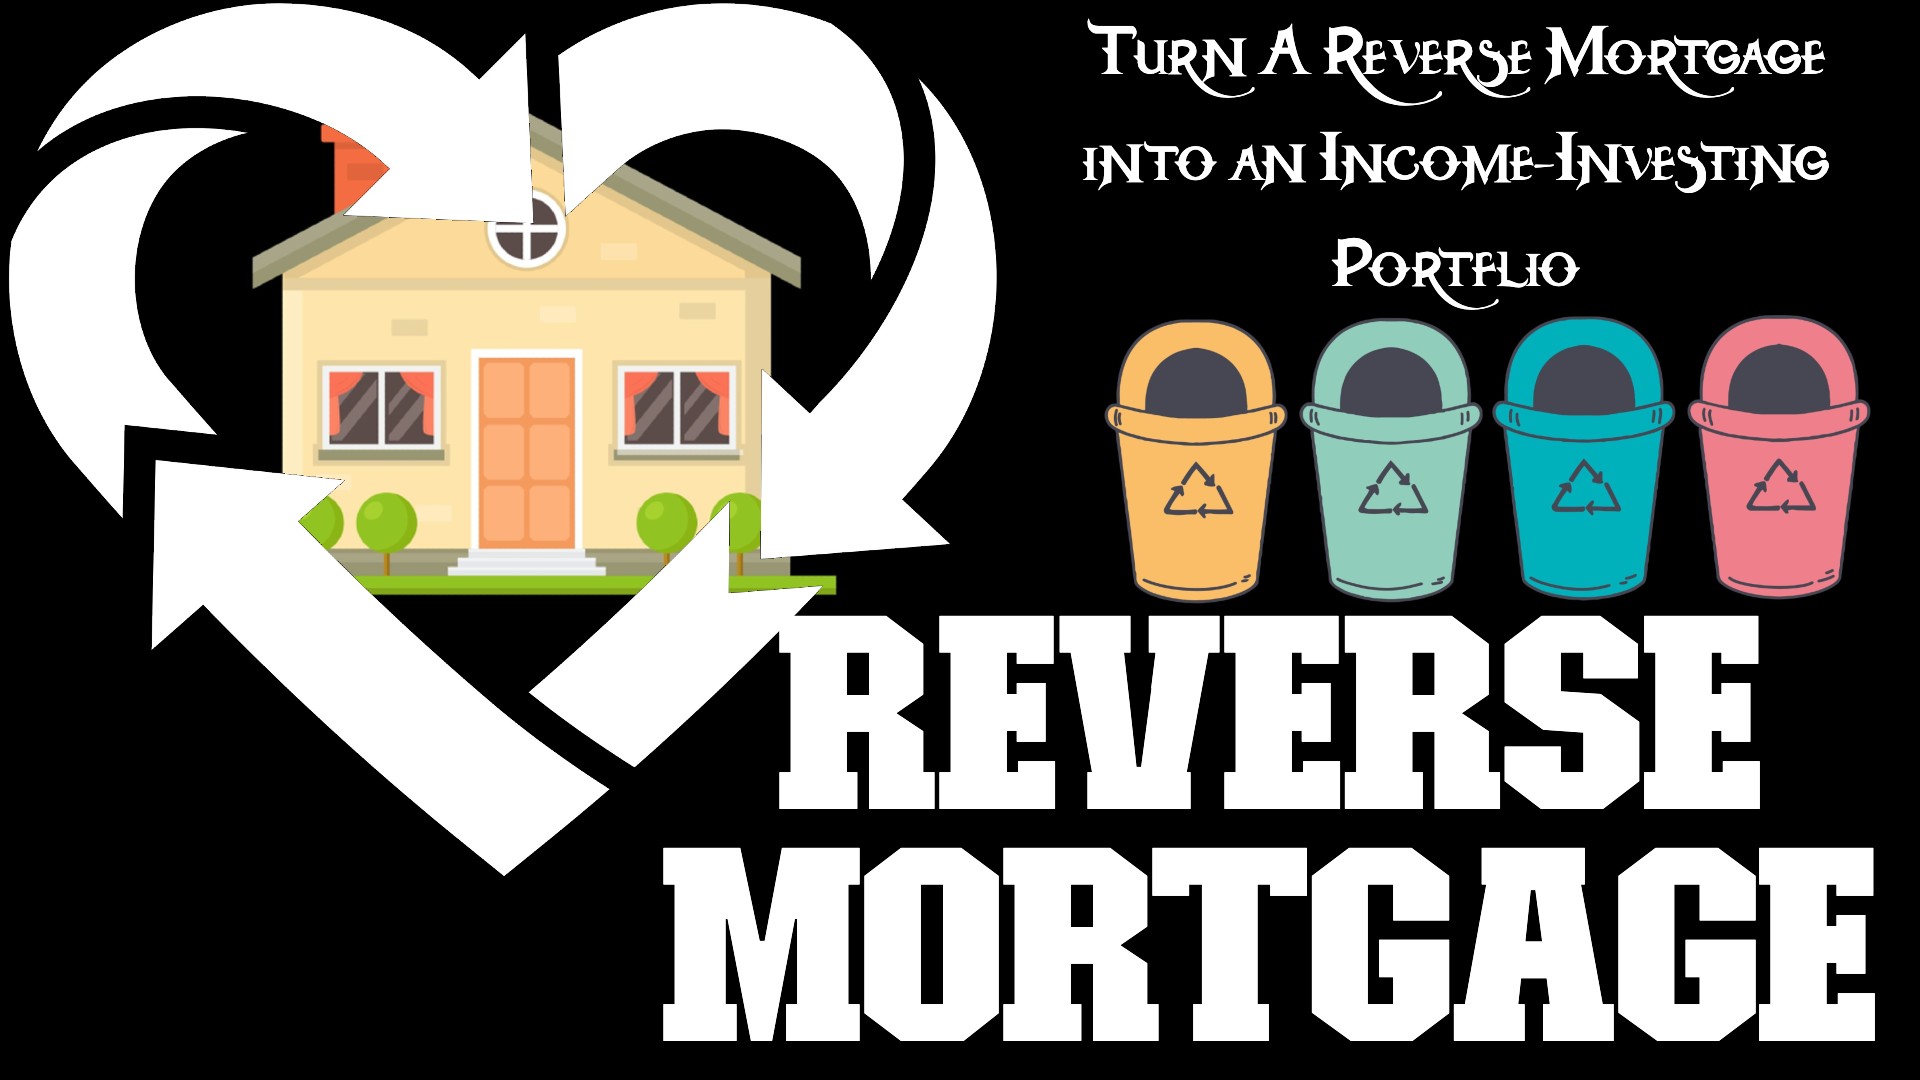 Turn a Reverse Mortgage into an Income-Investing Portfolio